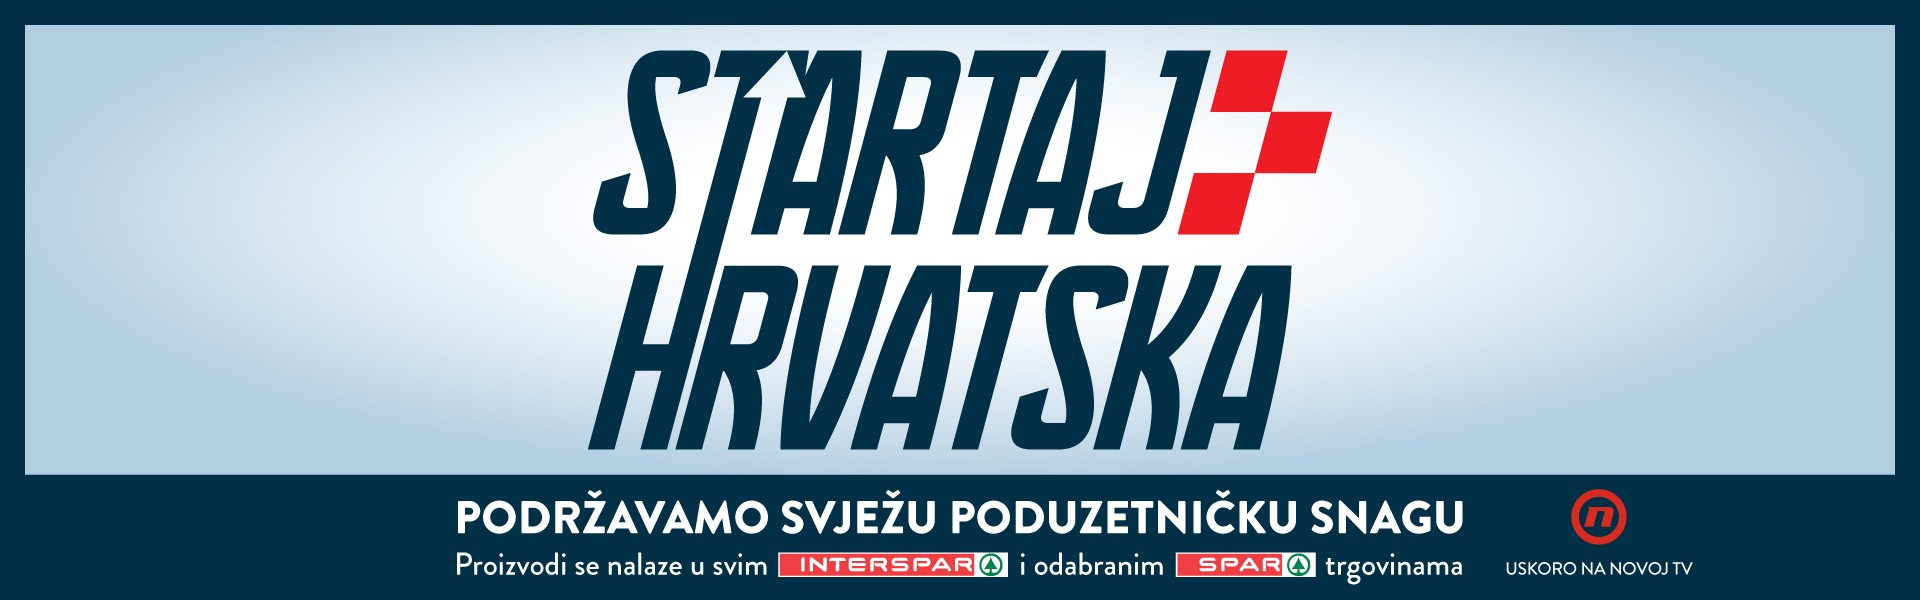 SPAR Startaj Hrvatska sezona 2